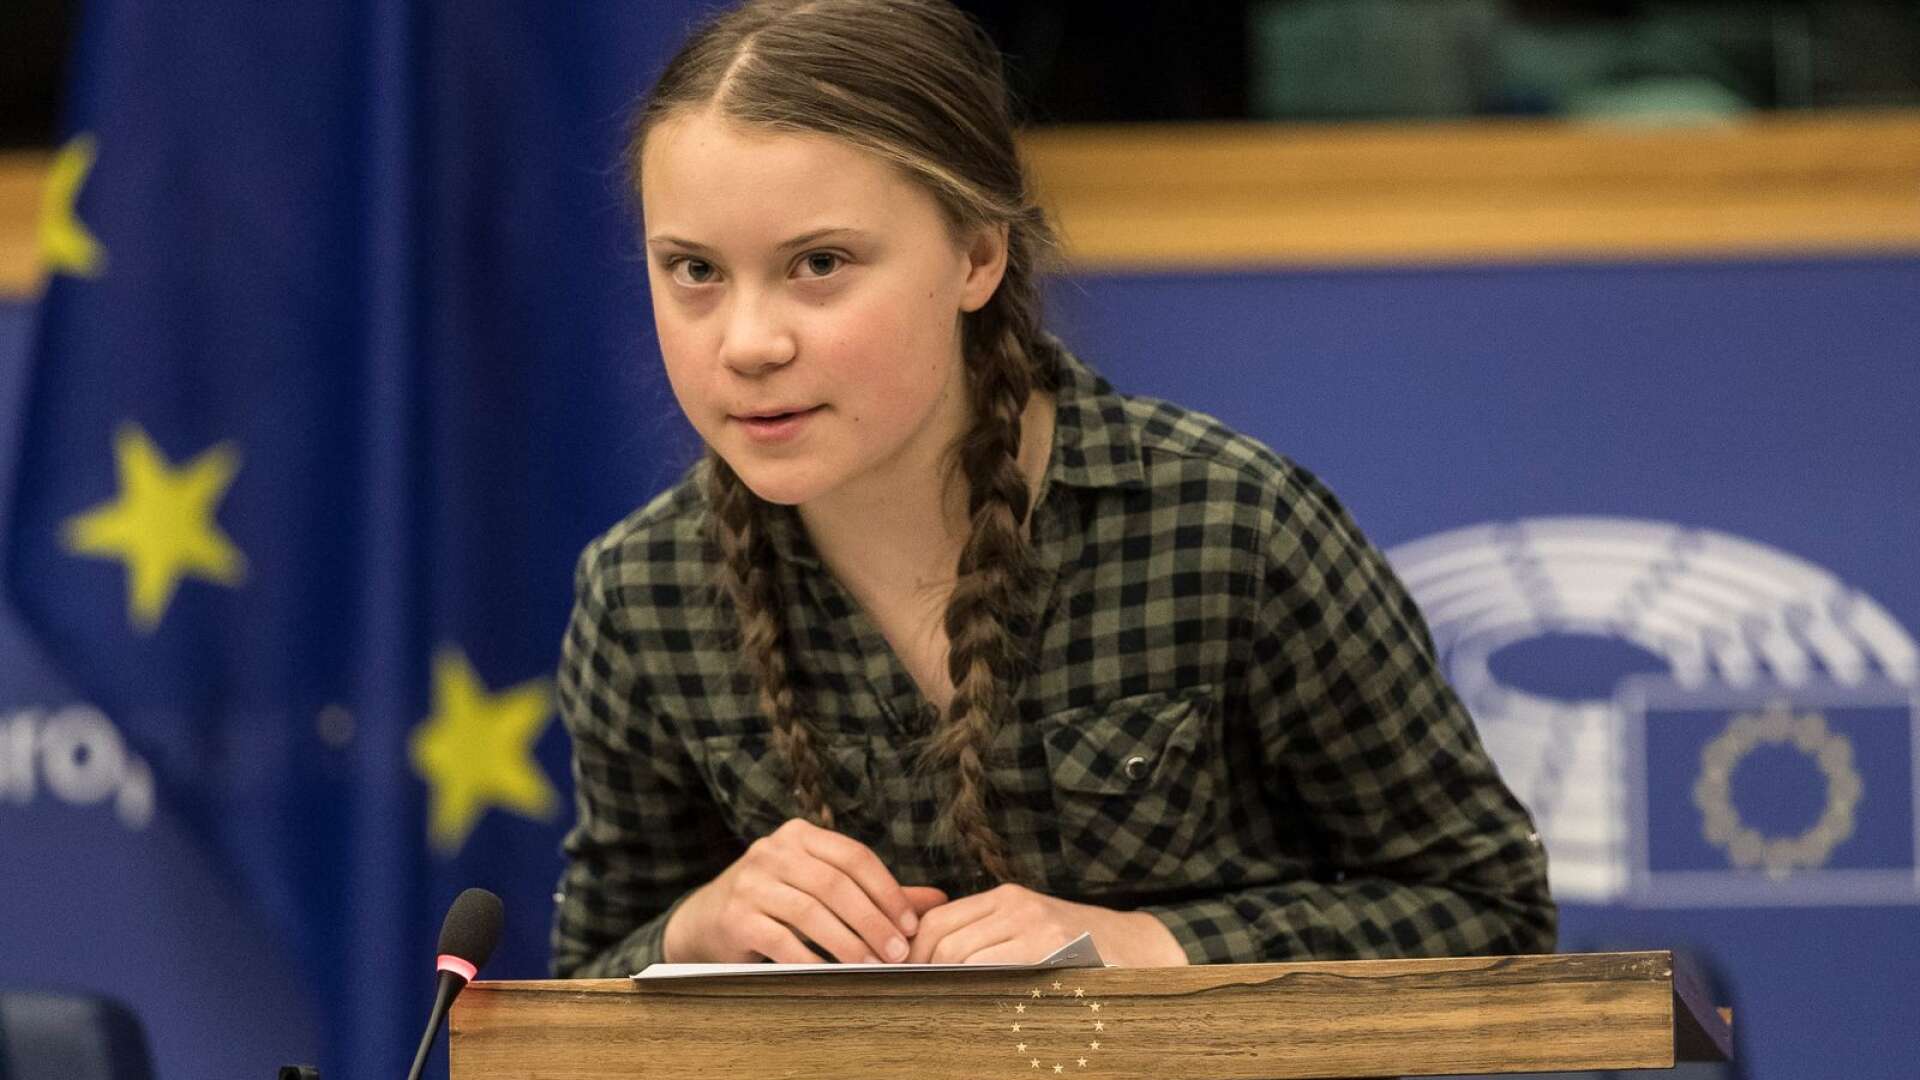 Klimataktivisten Greta Thunberg under ett tidigare besök i Europaparlamentet i Strasbourg.